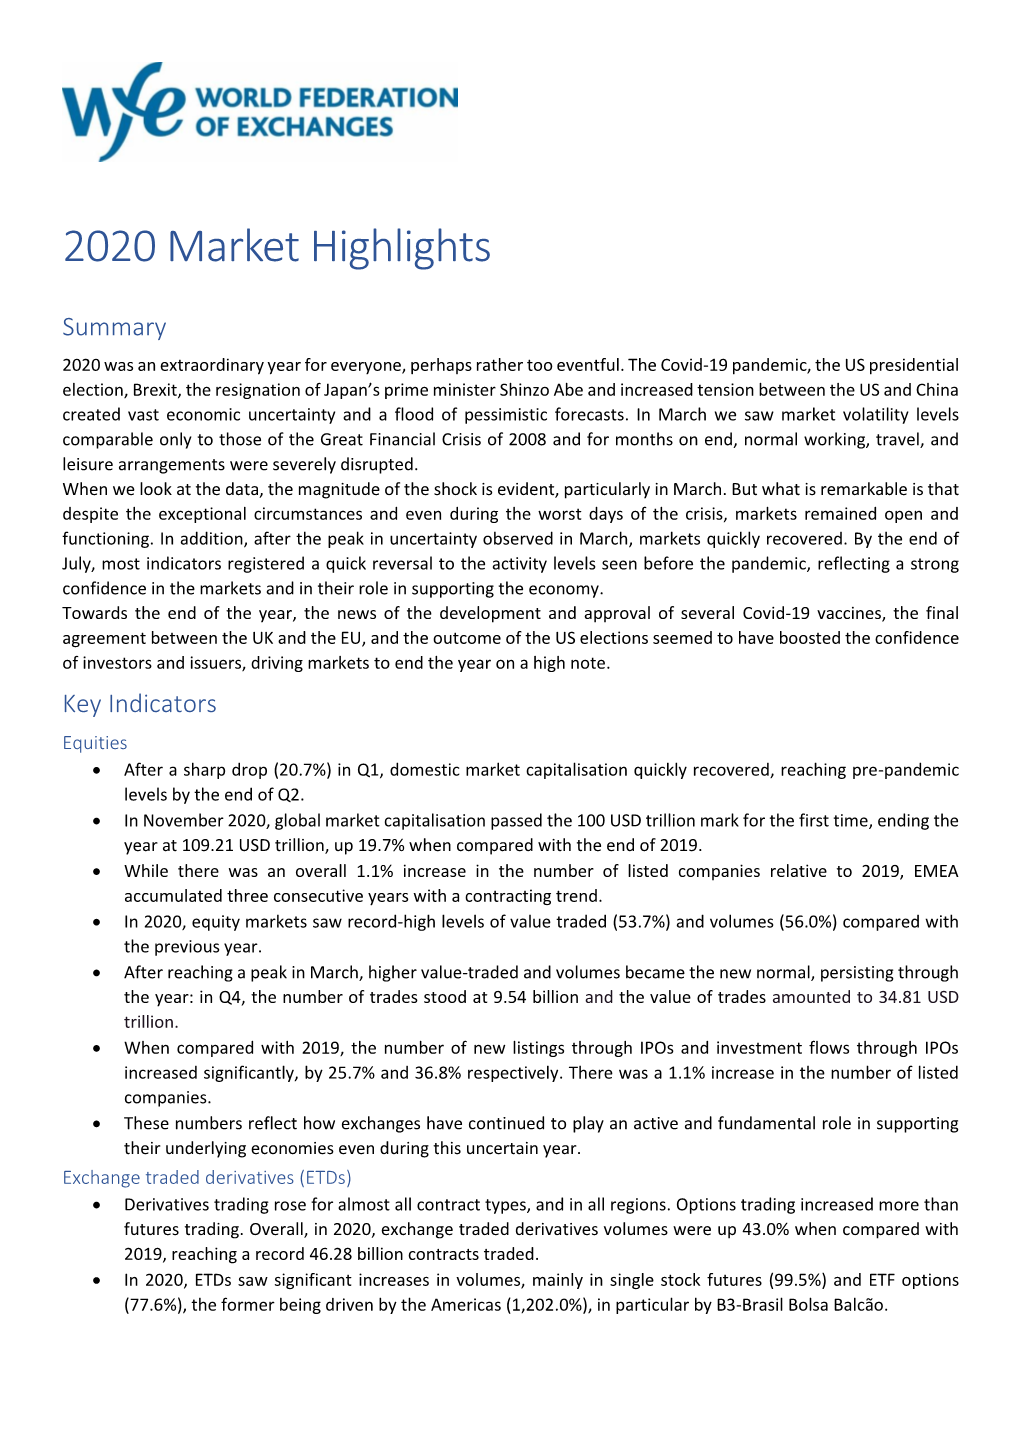 2020 Market Highlights Report